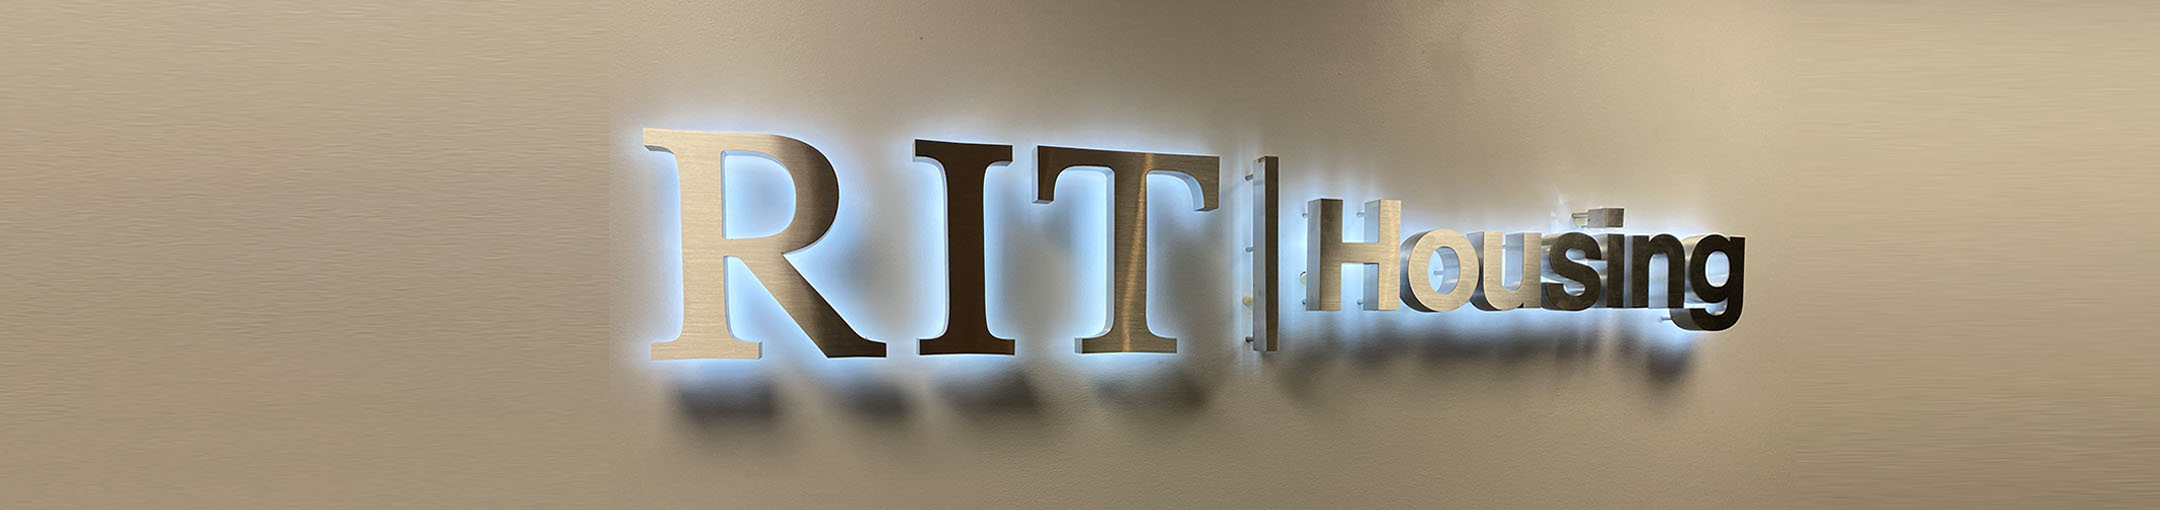 Illuminated RIT Housing Logo on a wall